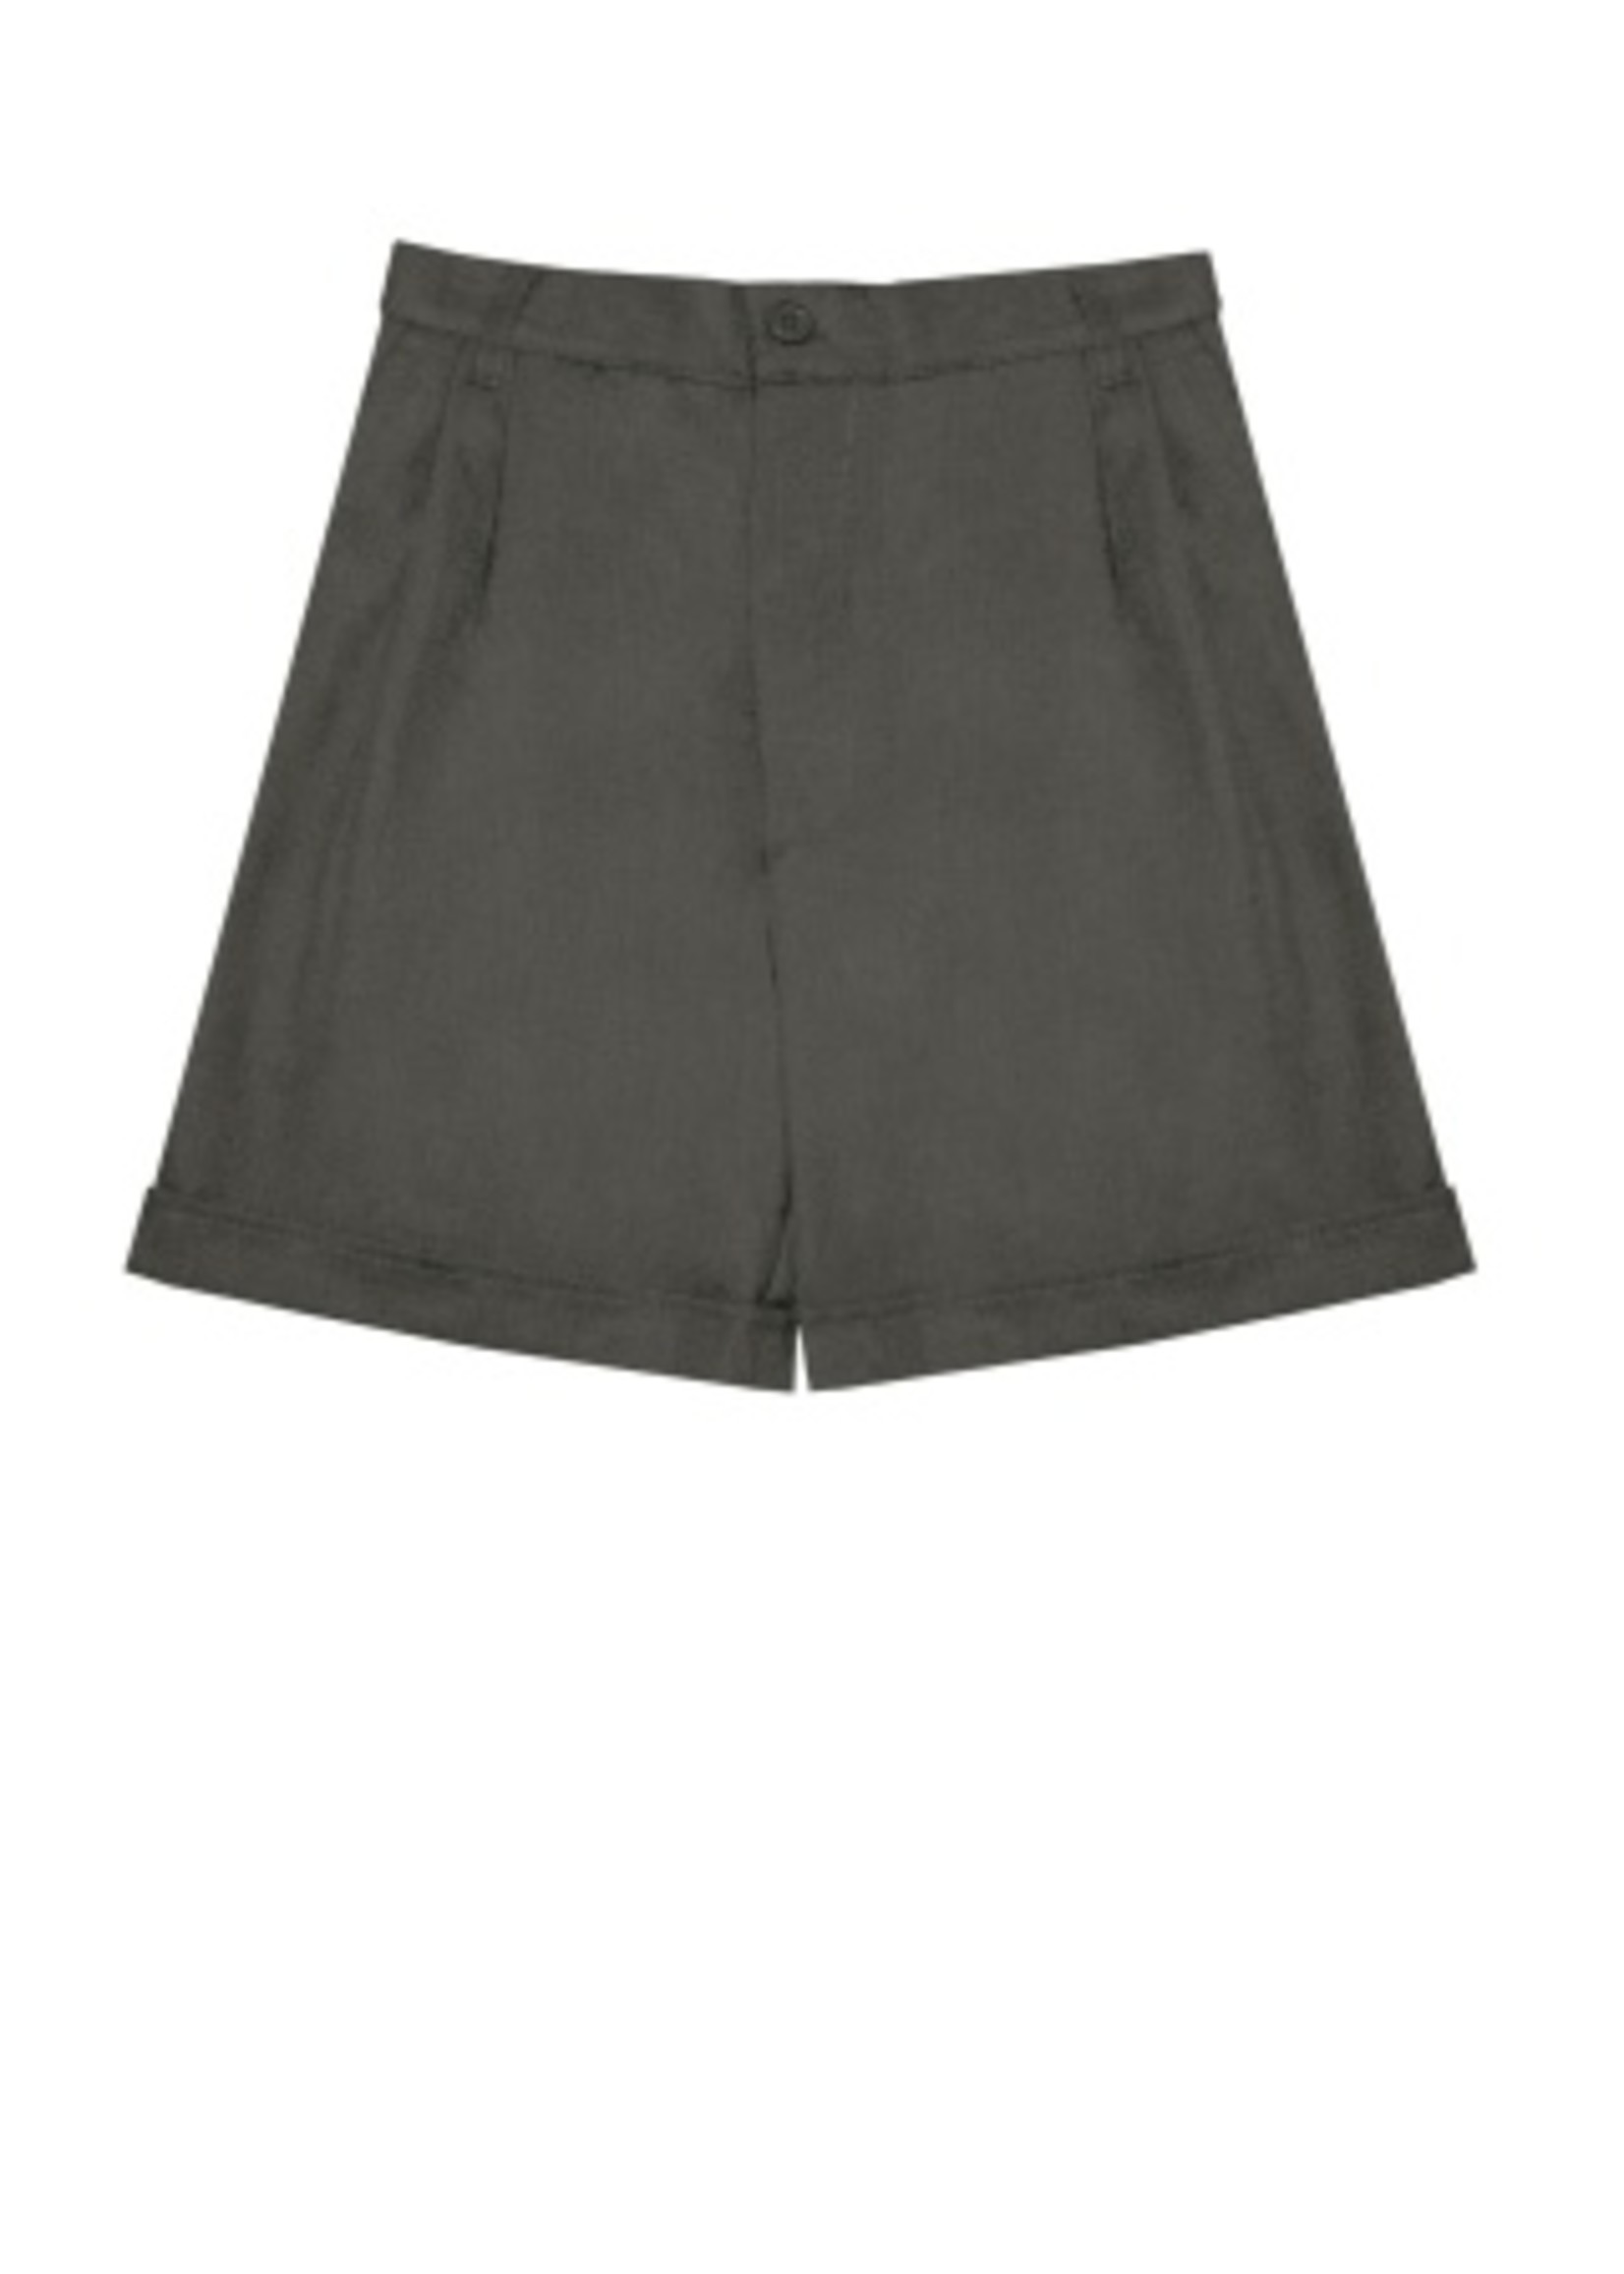 TOP MARKS Youth Unisex Grey Summer Dress Shorts